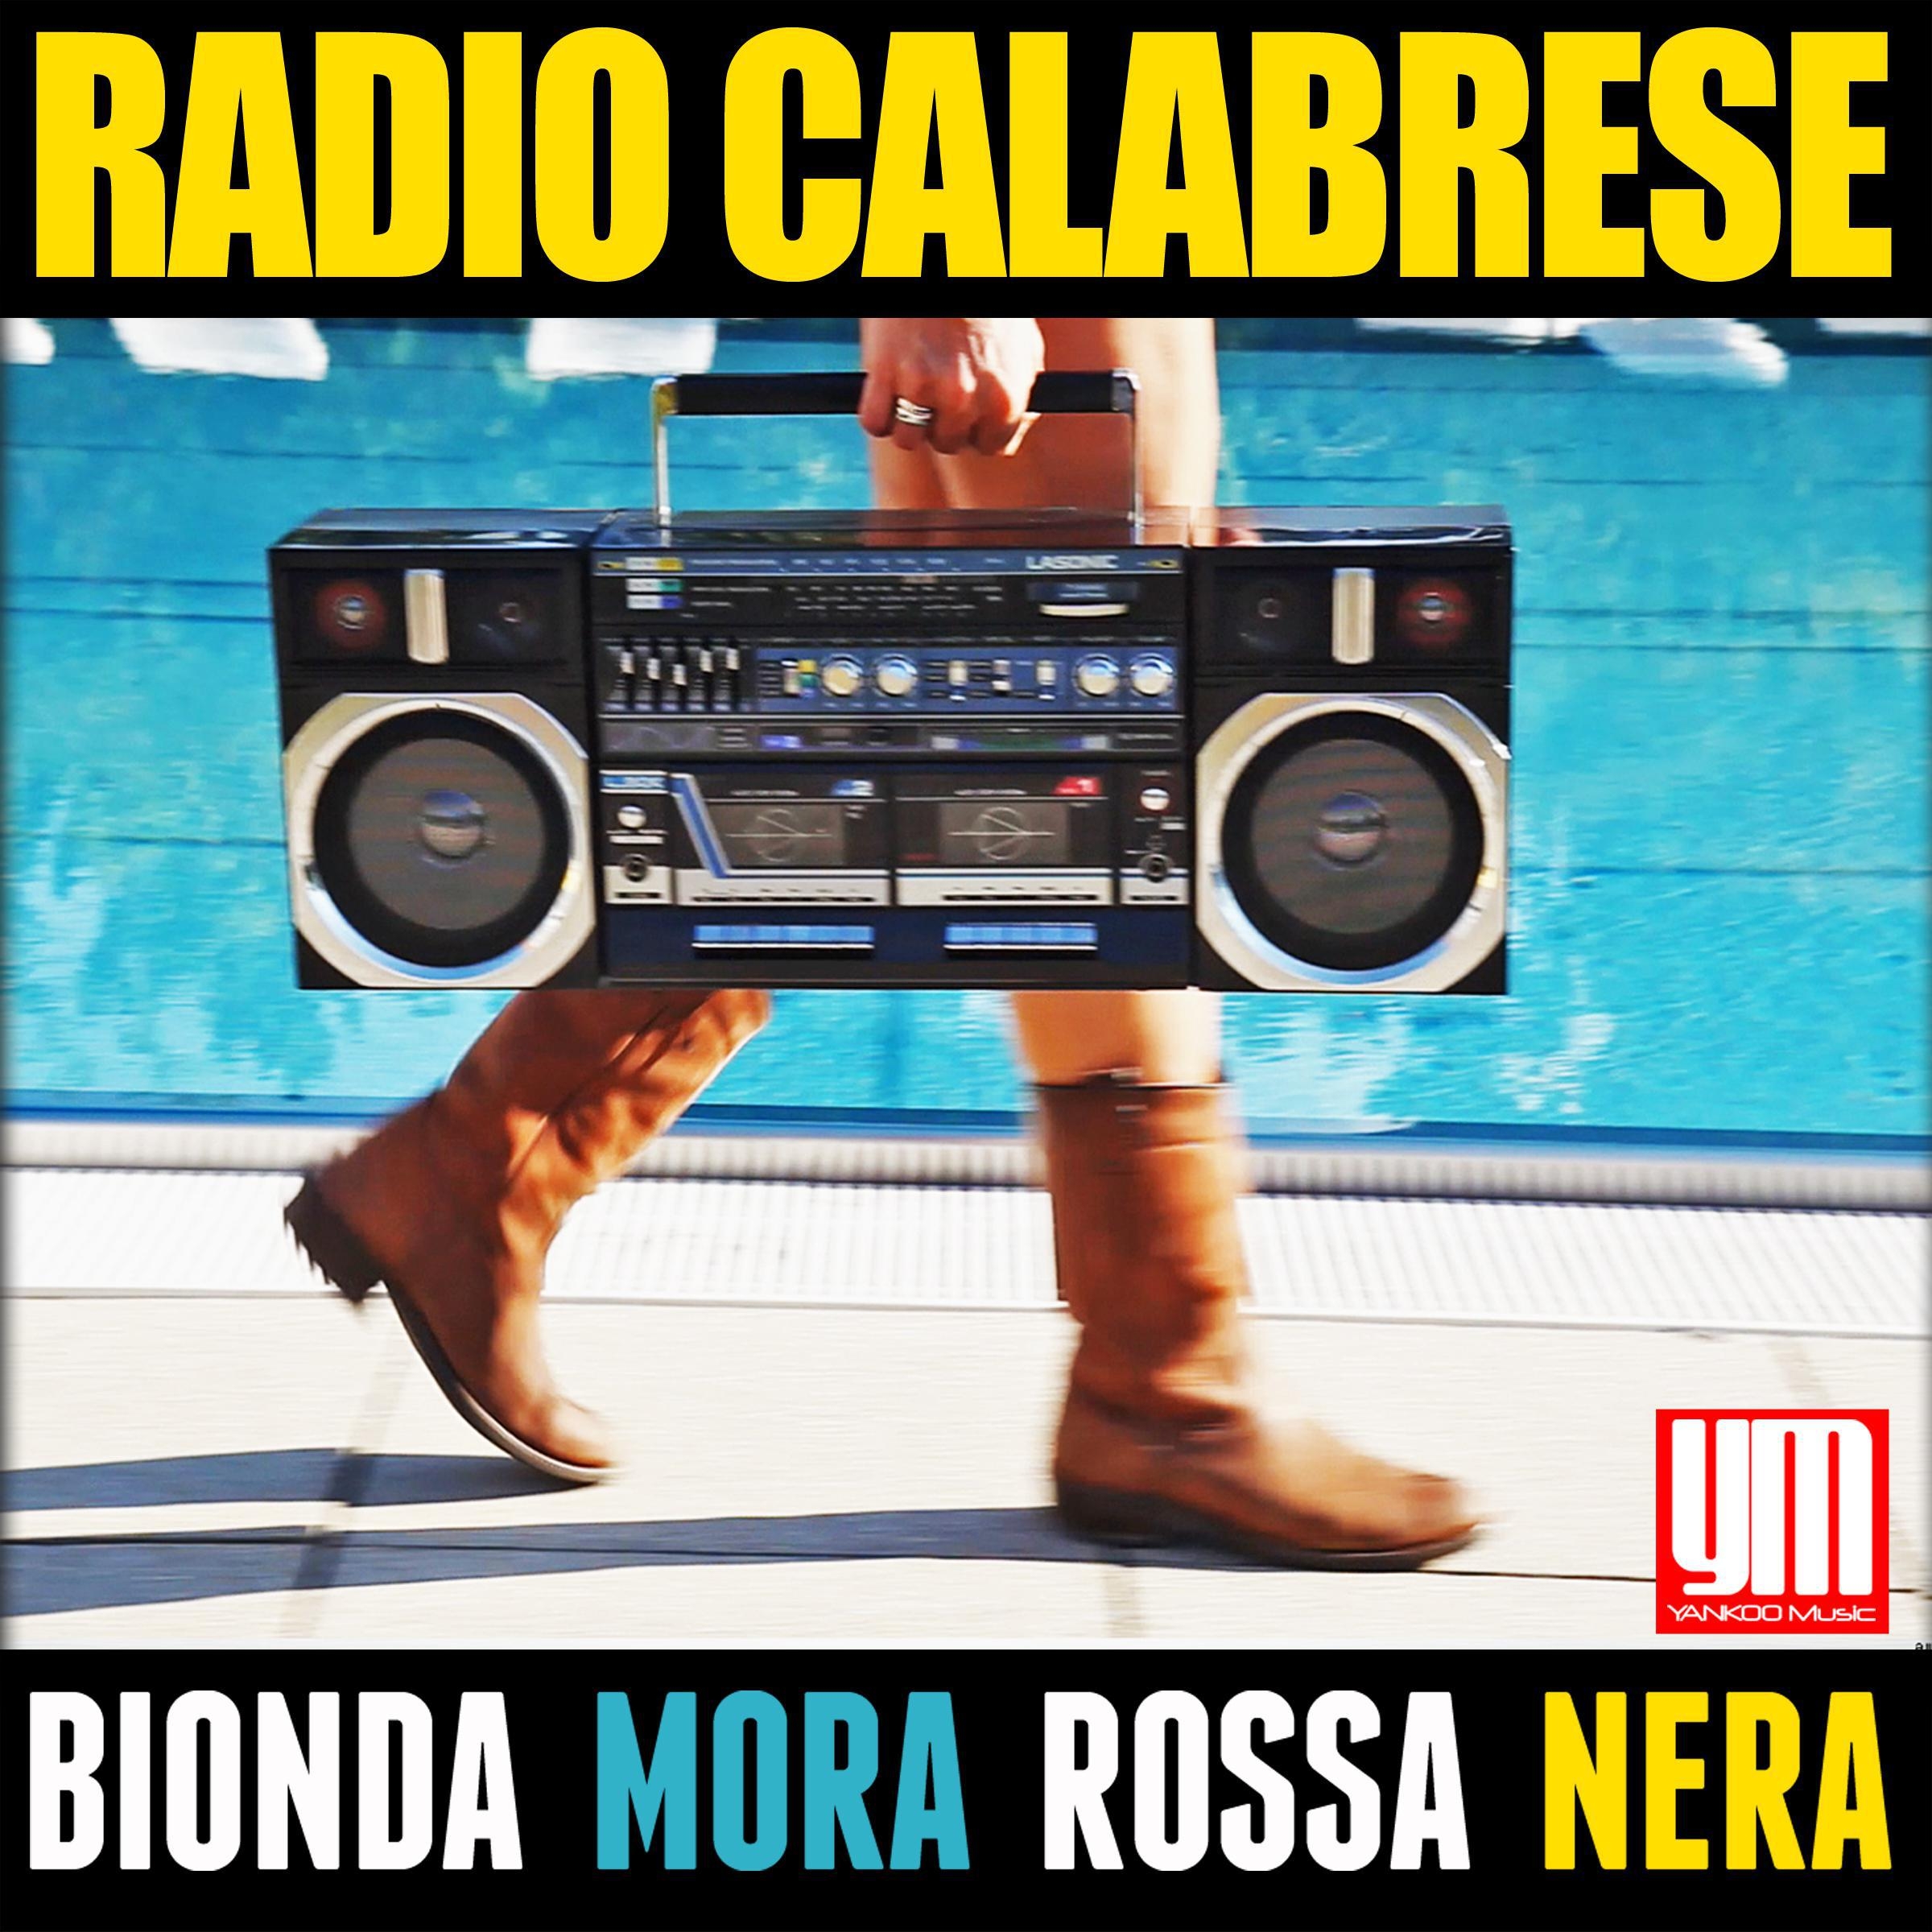 Bionda Mora Rossa Nera (Video)